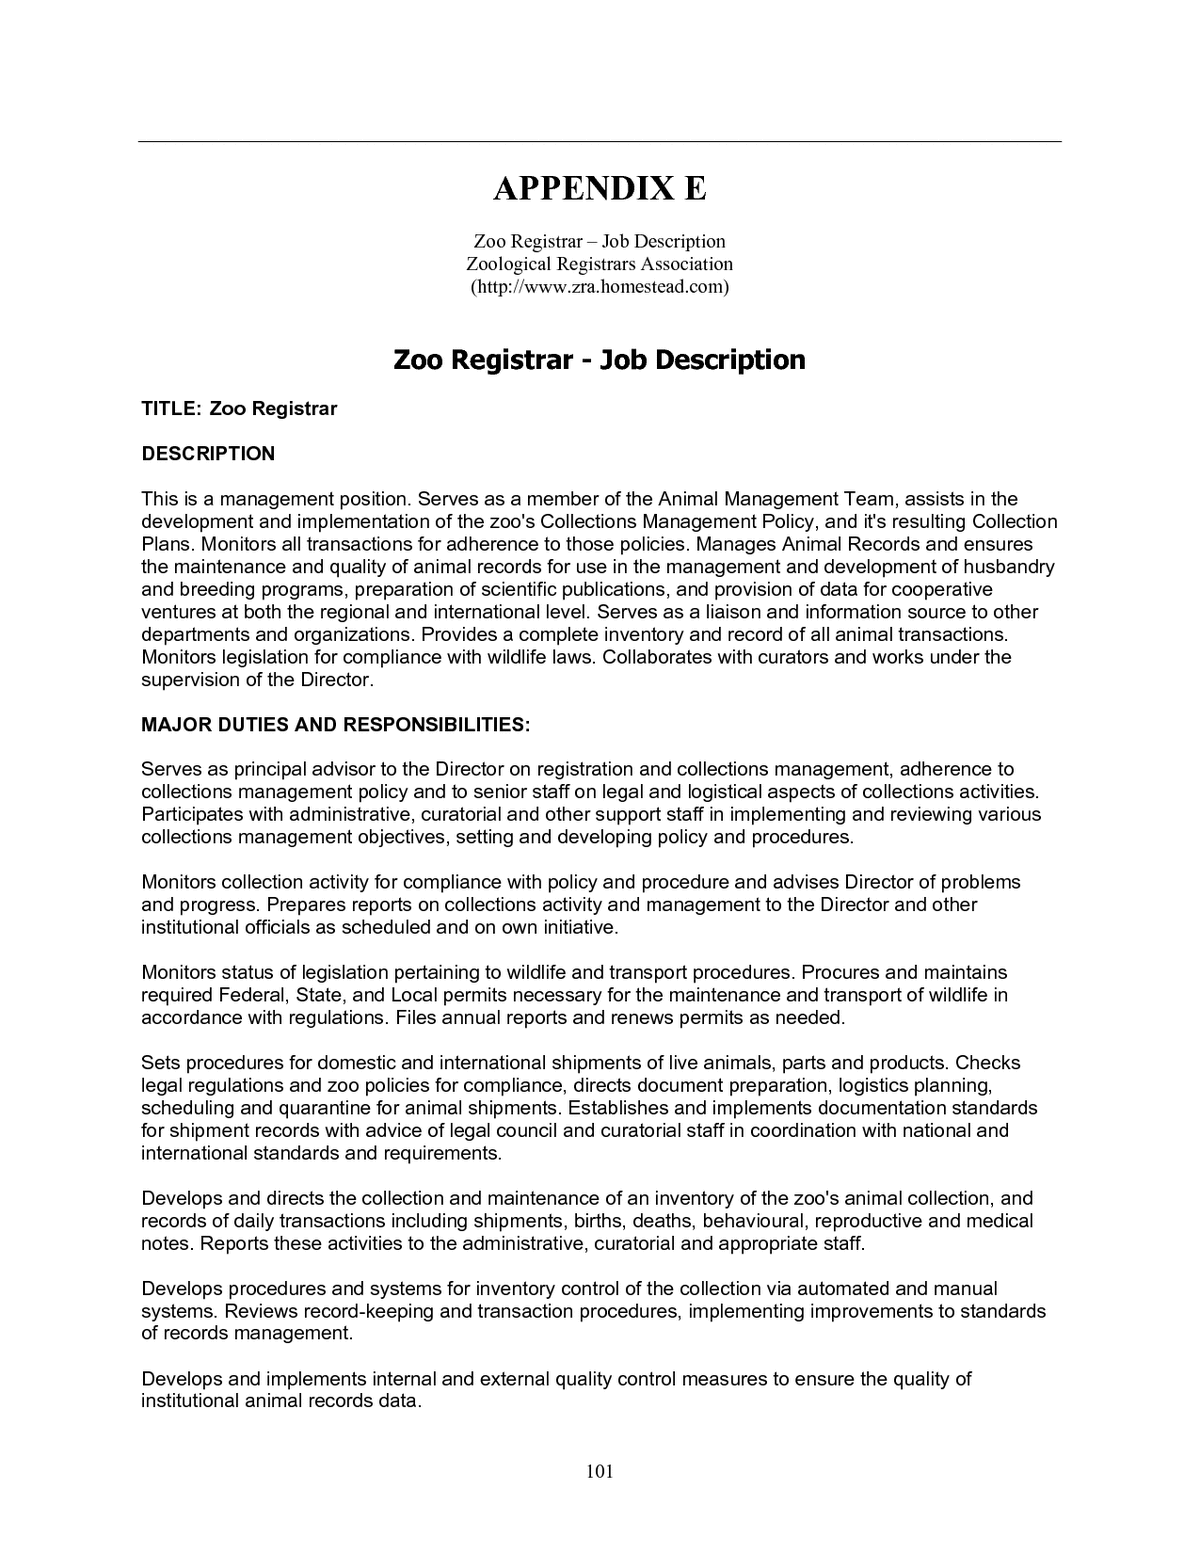 E Zoo Registrar Job Description | Animal Care and Management at the  National Zoo: Interim Report |The National Academies Press